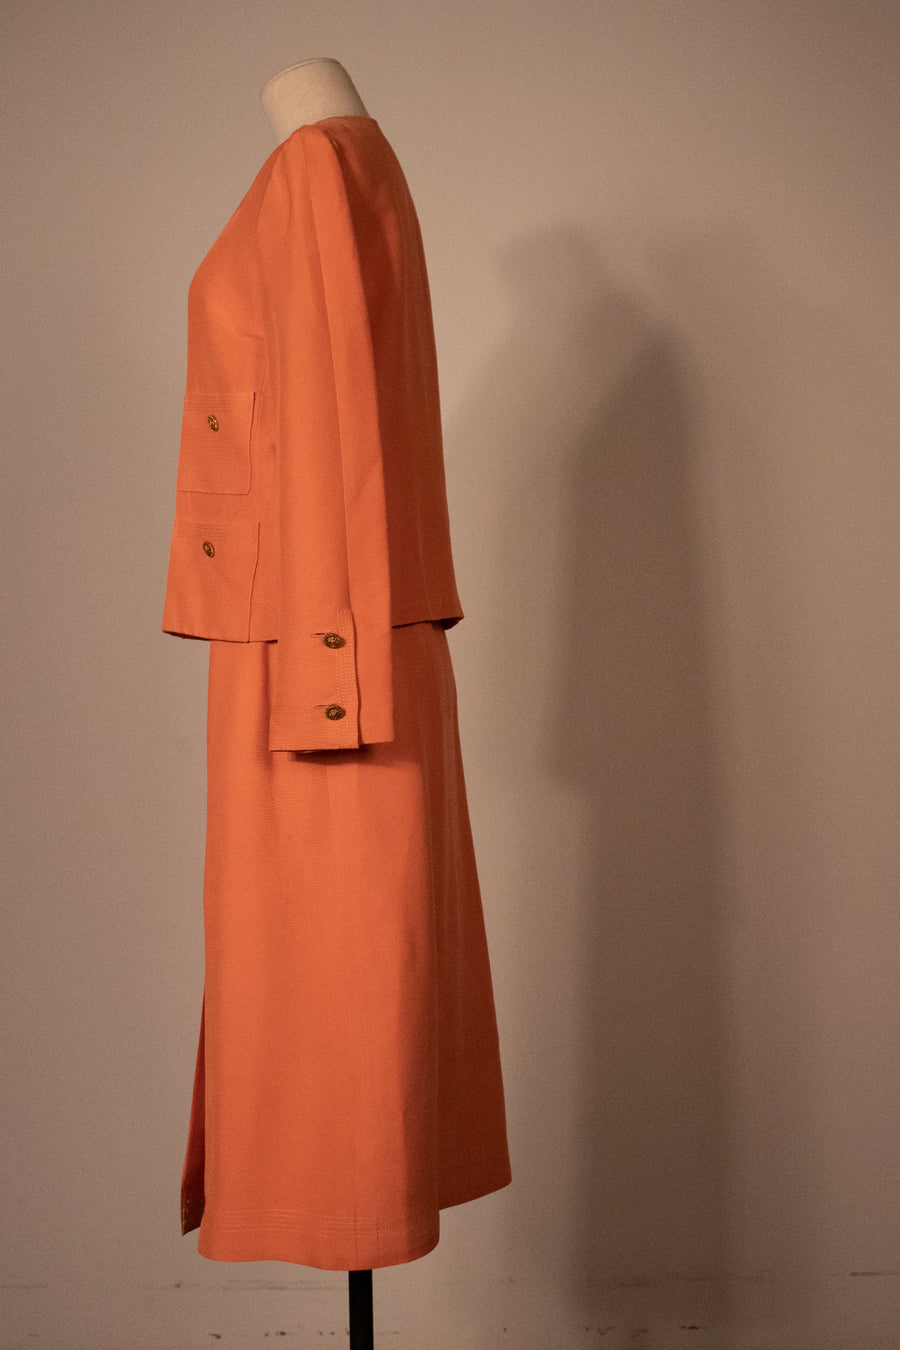 Chanel peach silk skirt suit